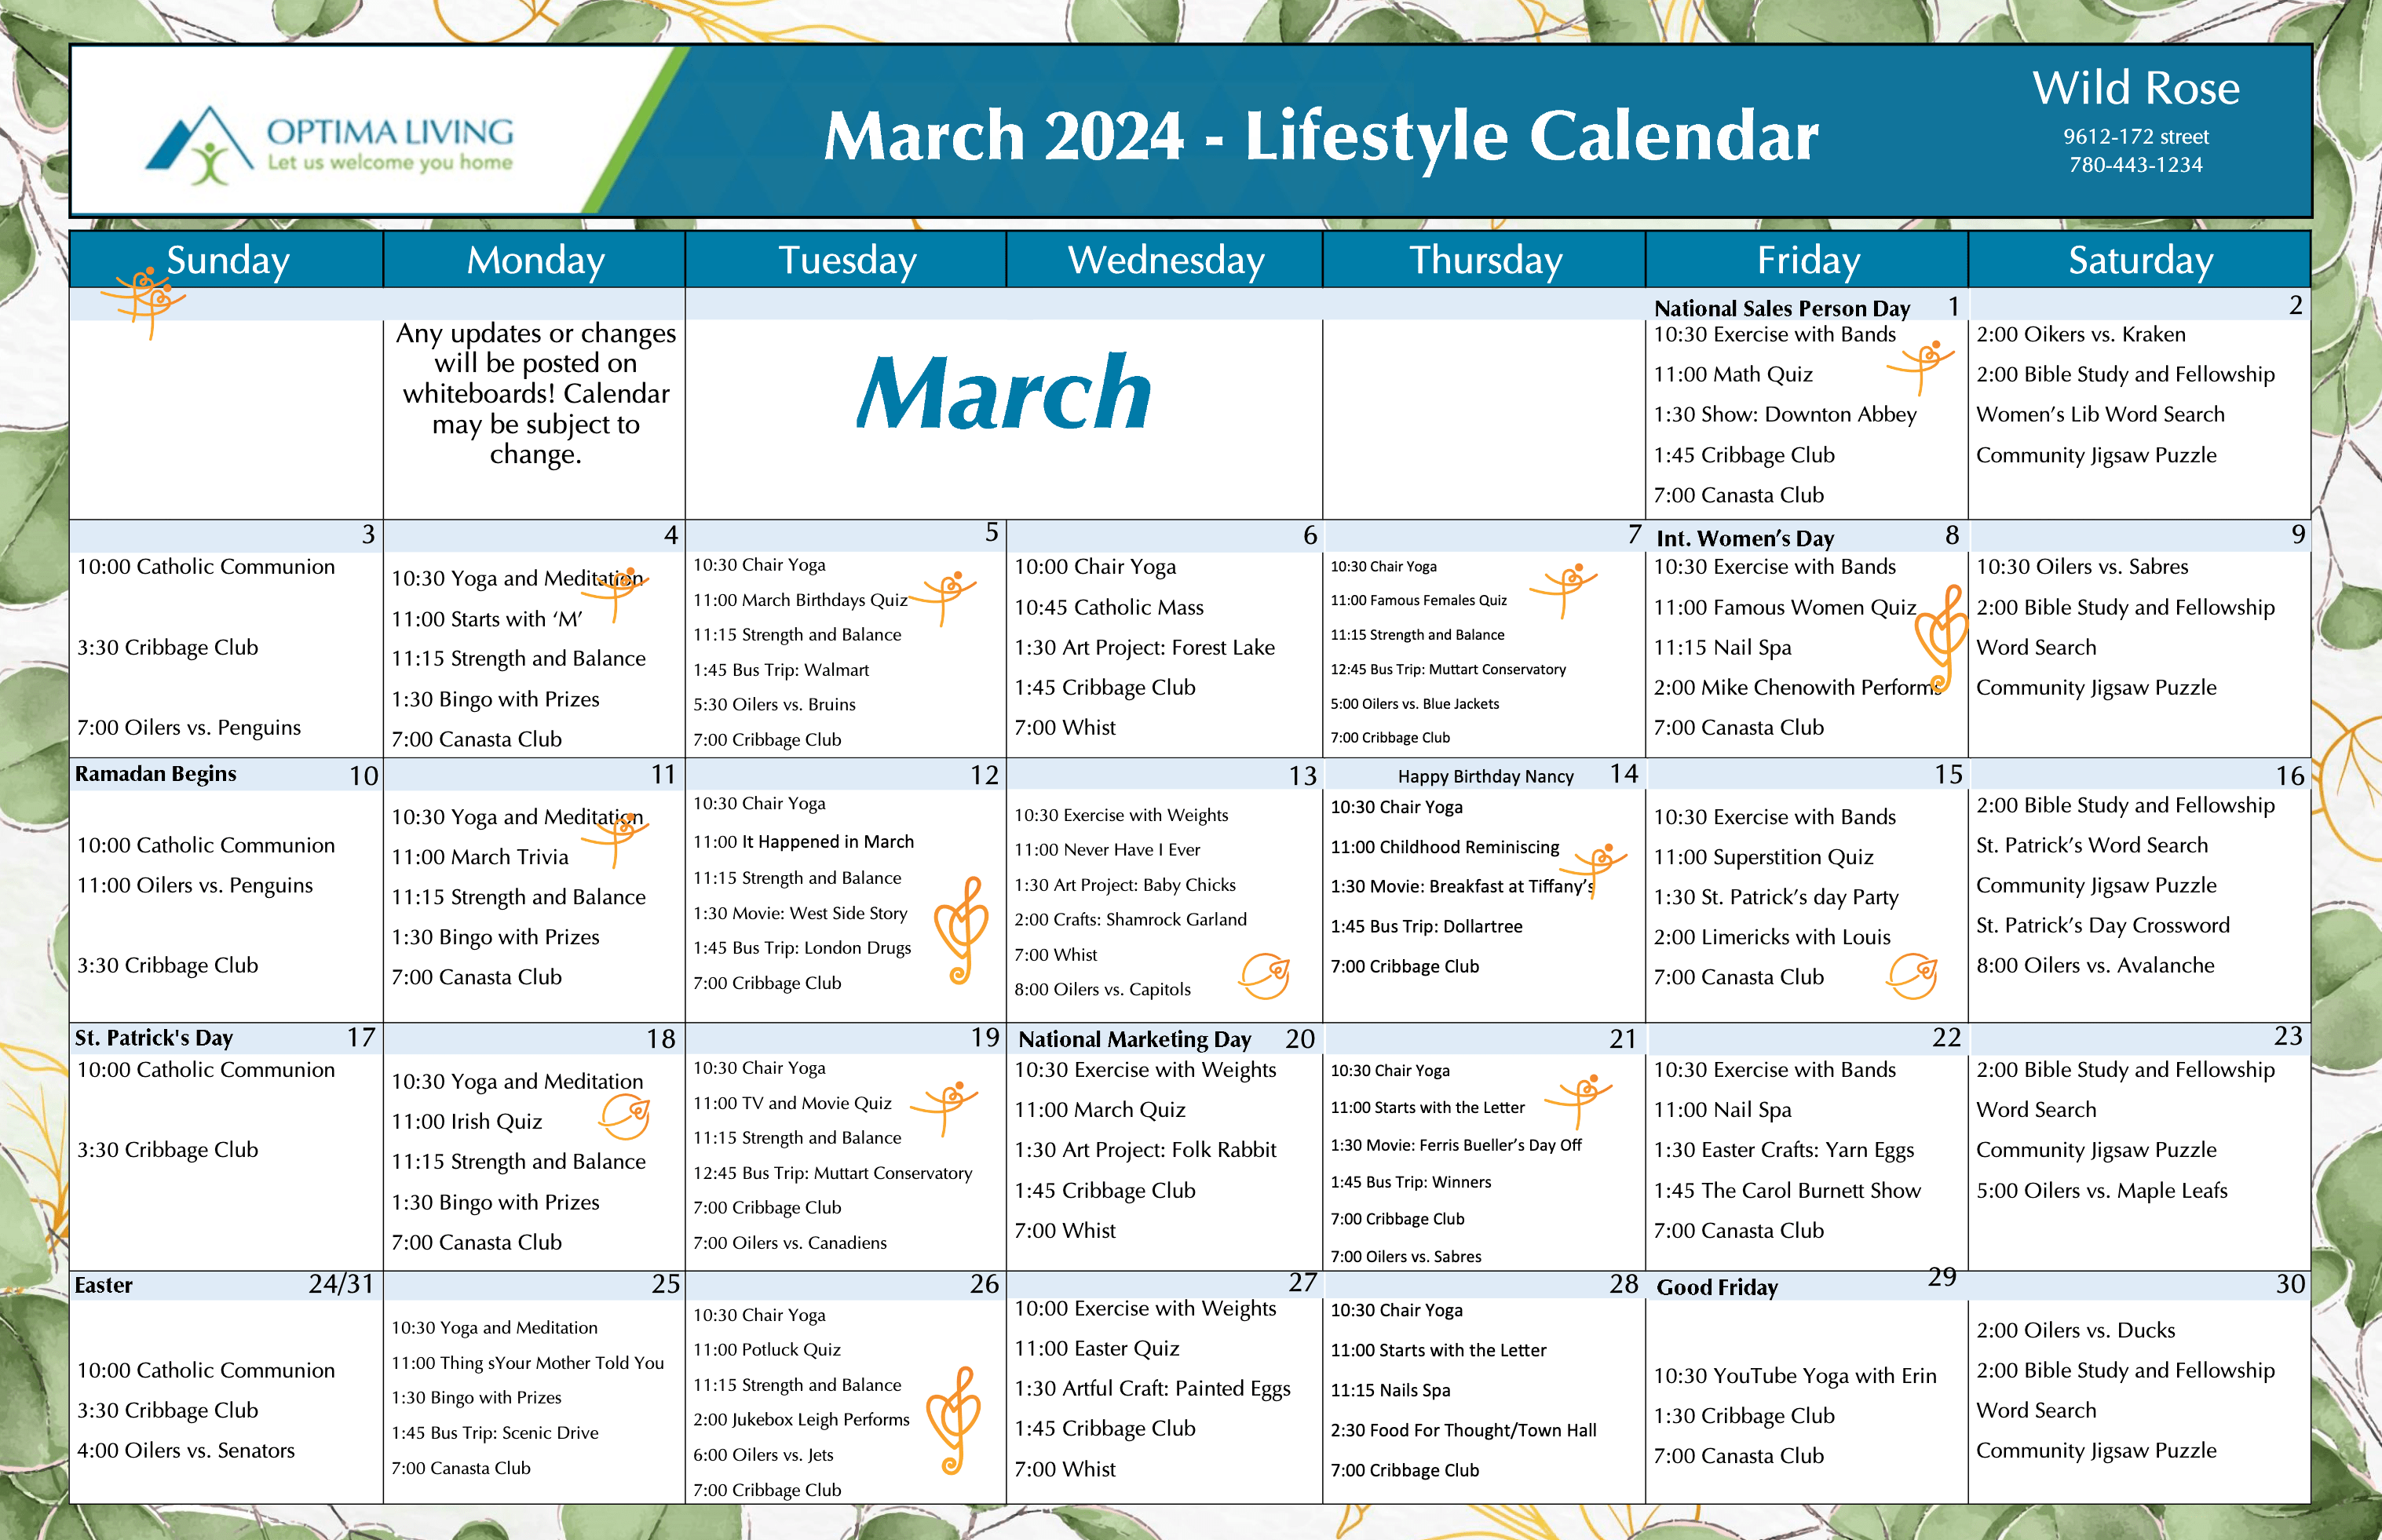 Wild Rose March 2024 event calendar